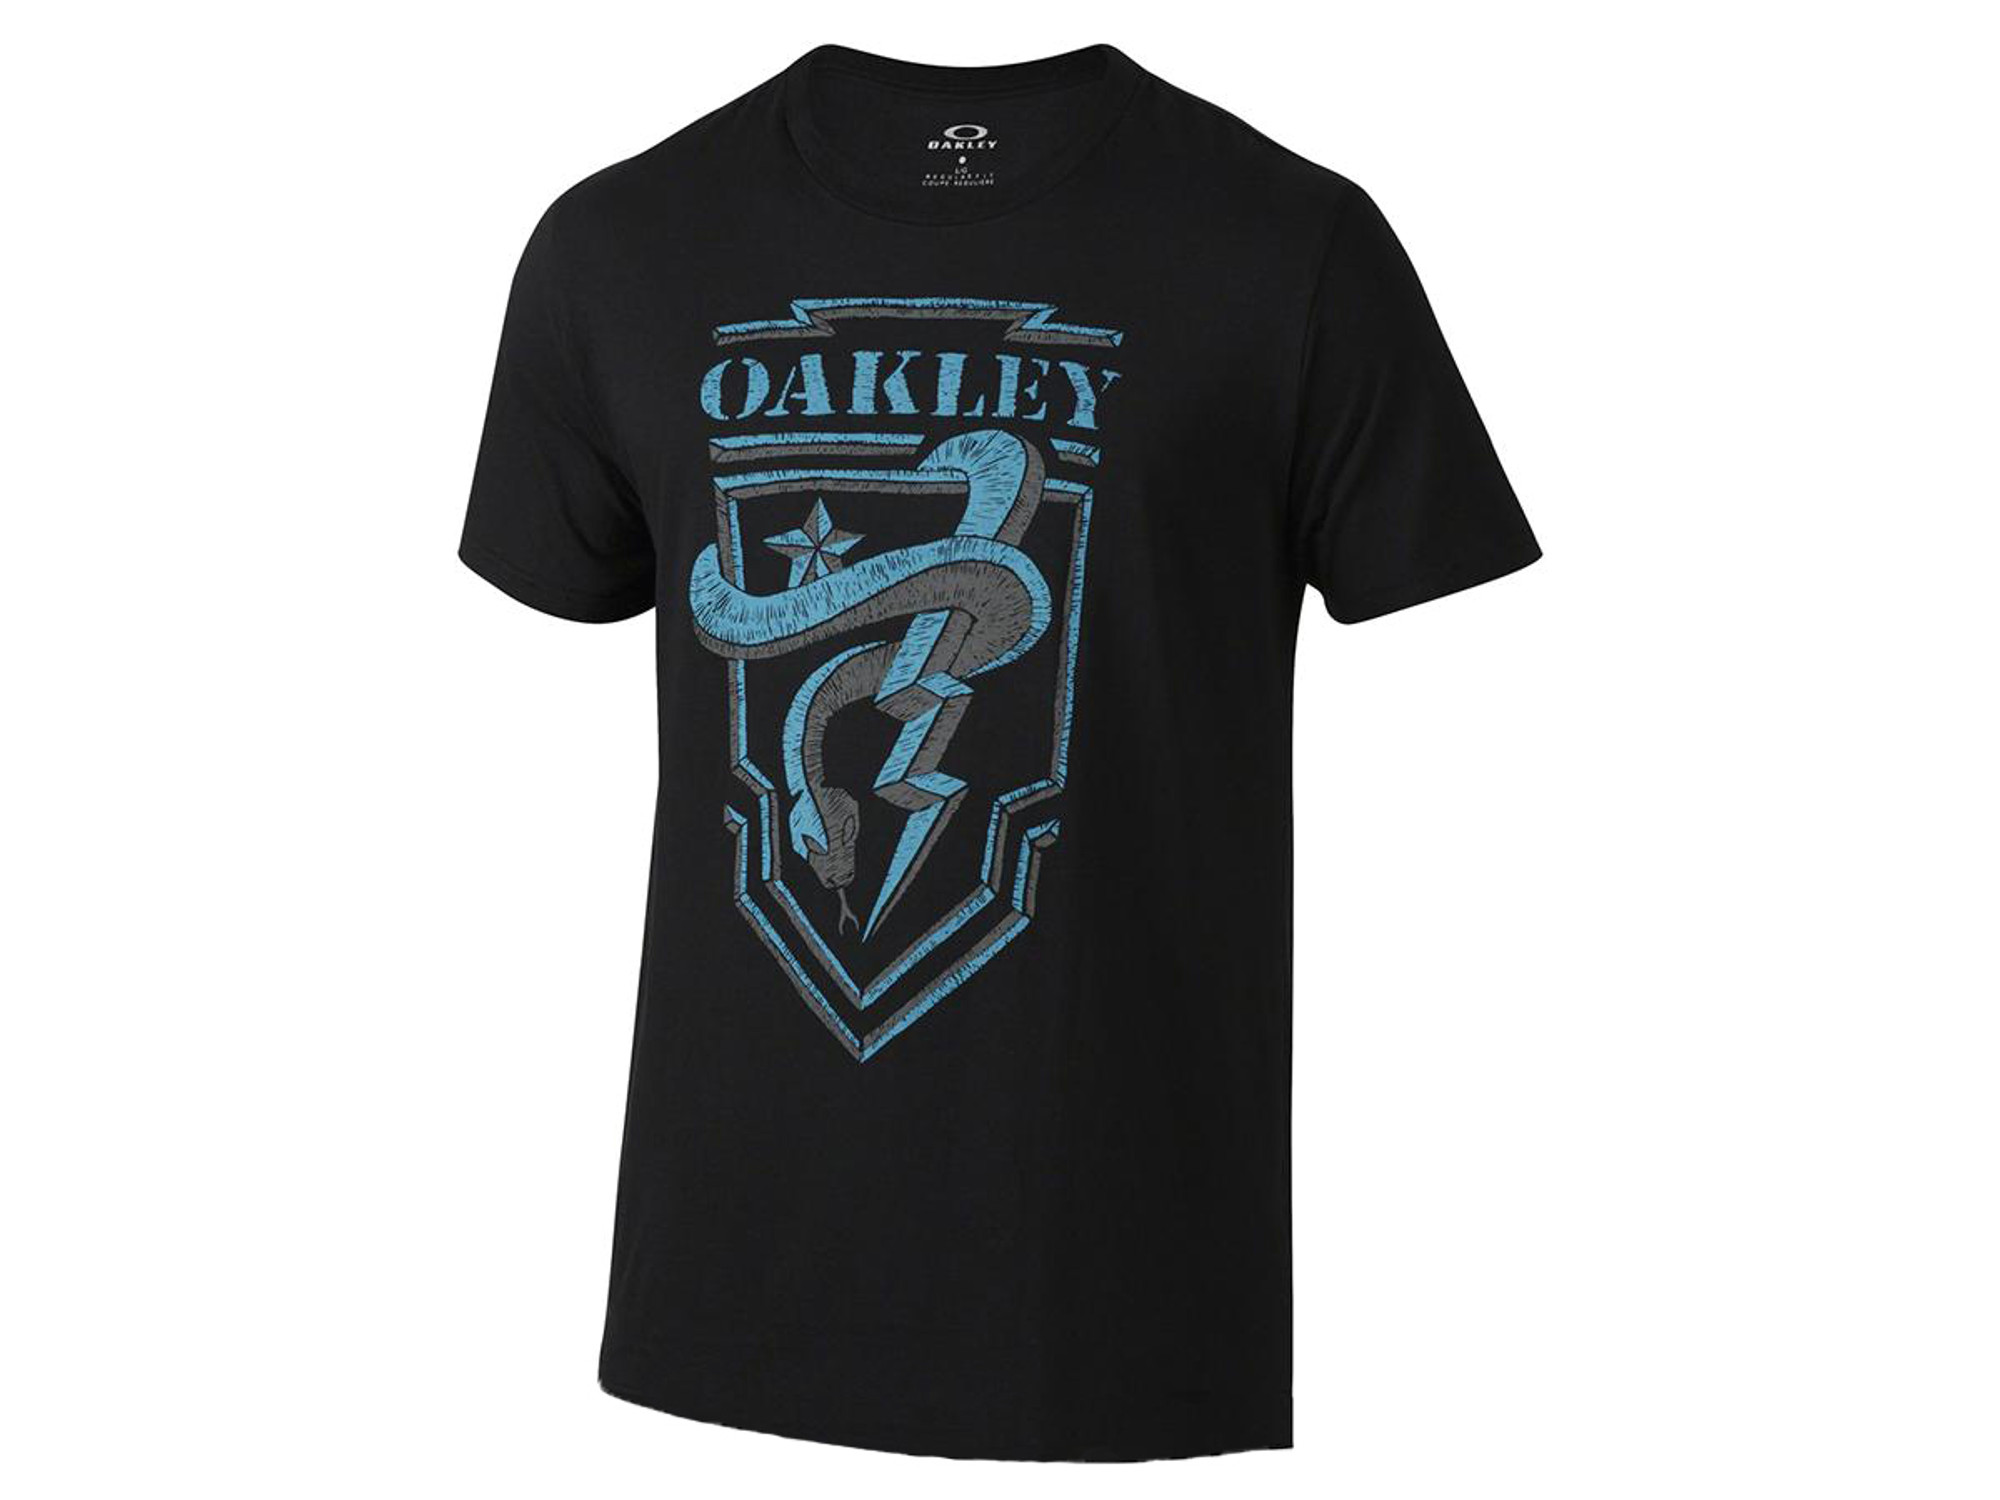 Oakley "Snake Shield" T-Shirt - Black